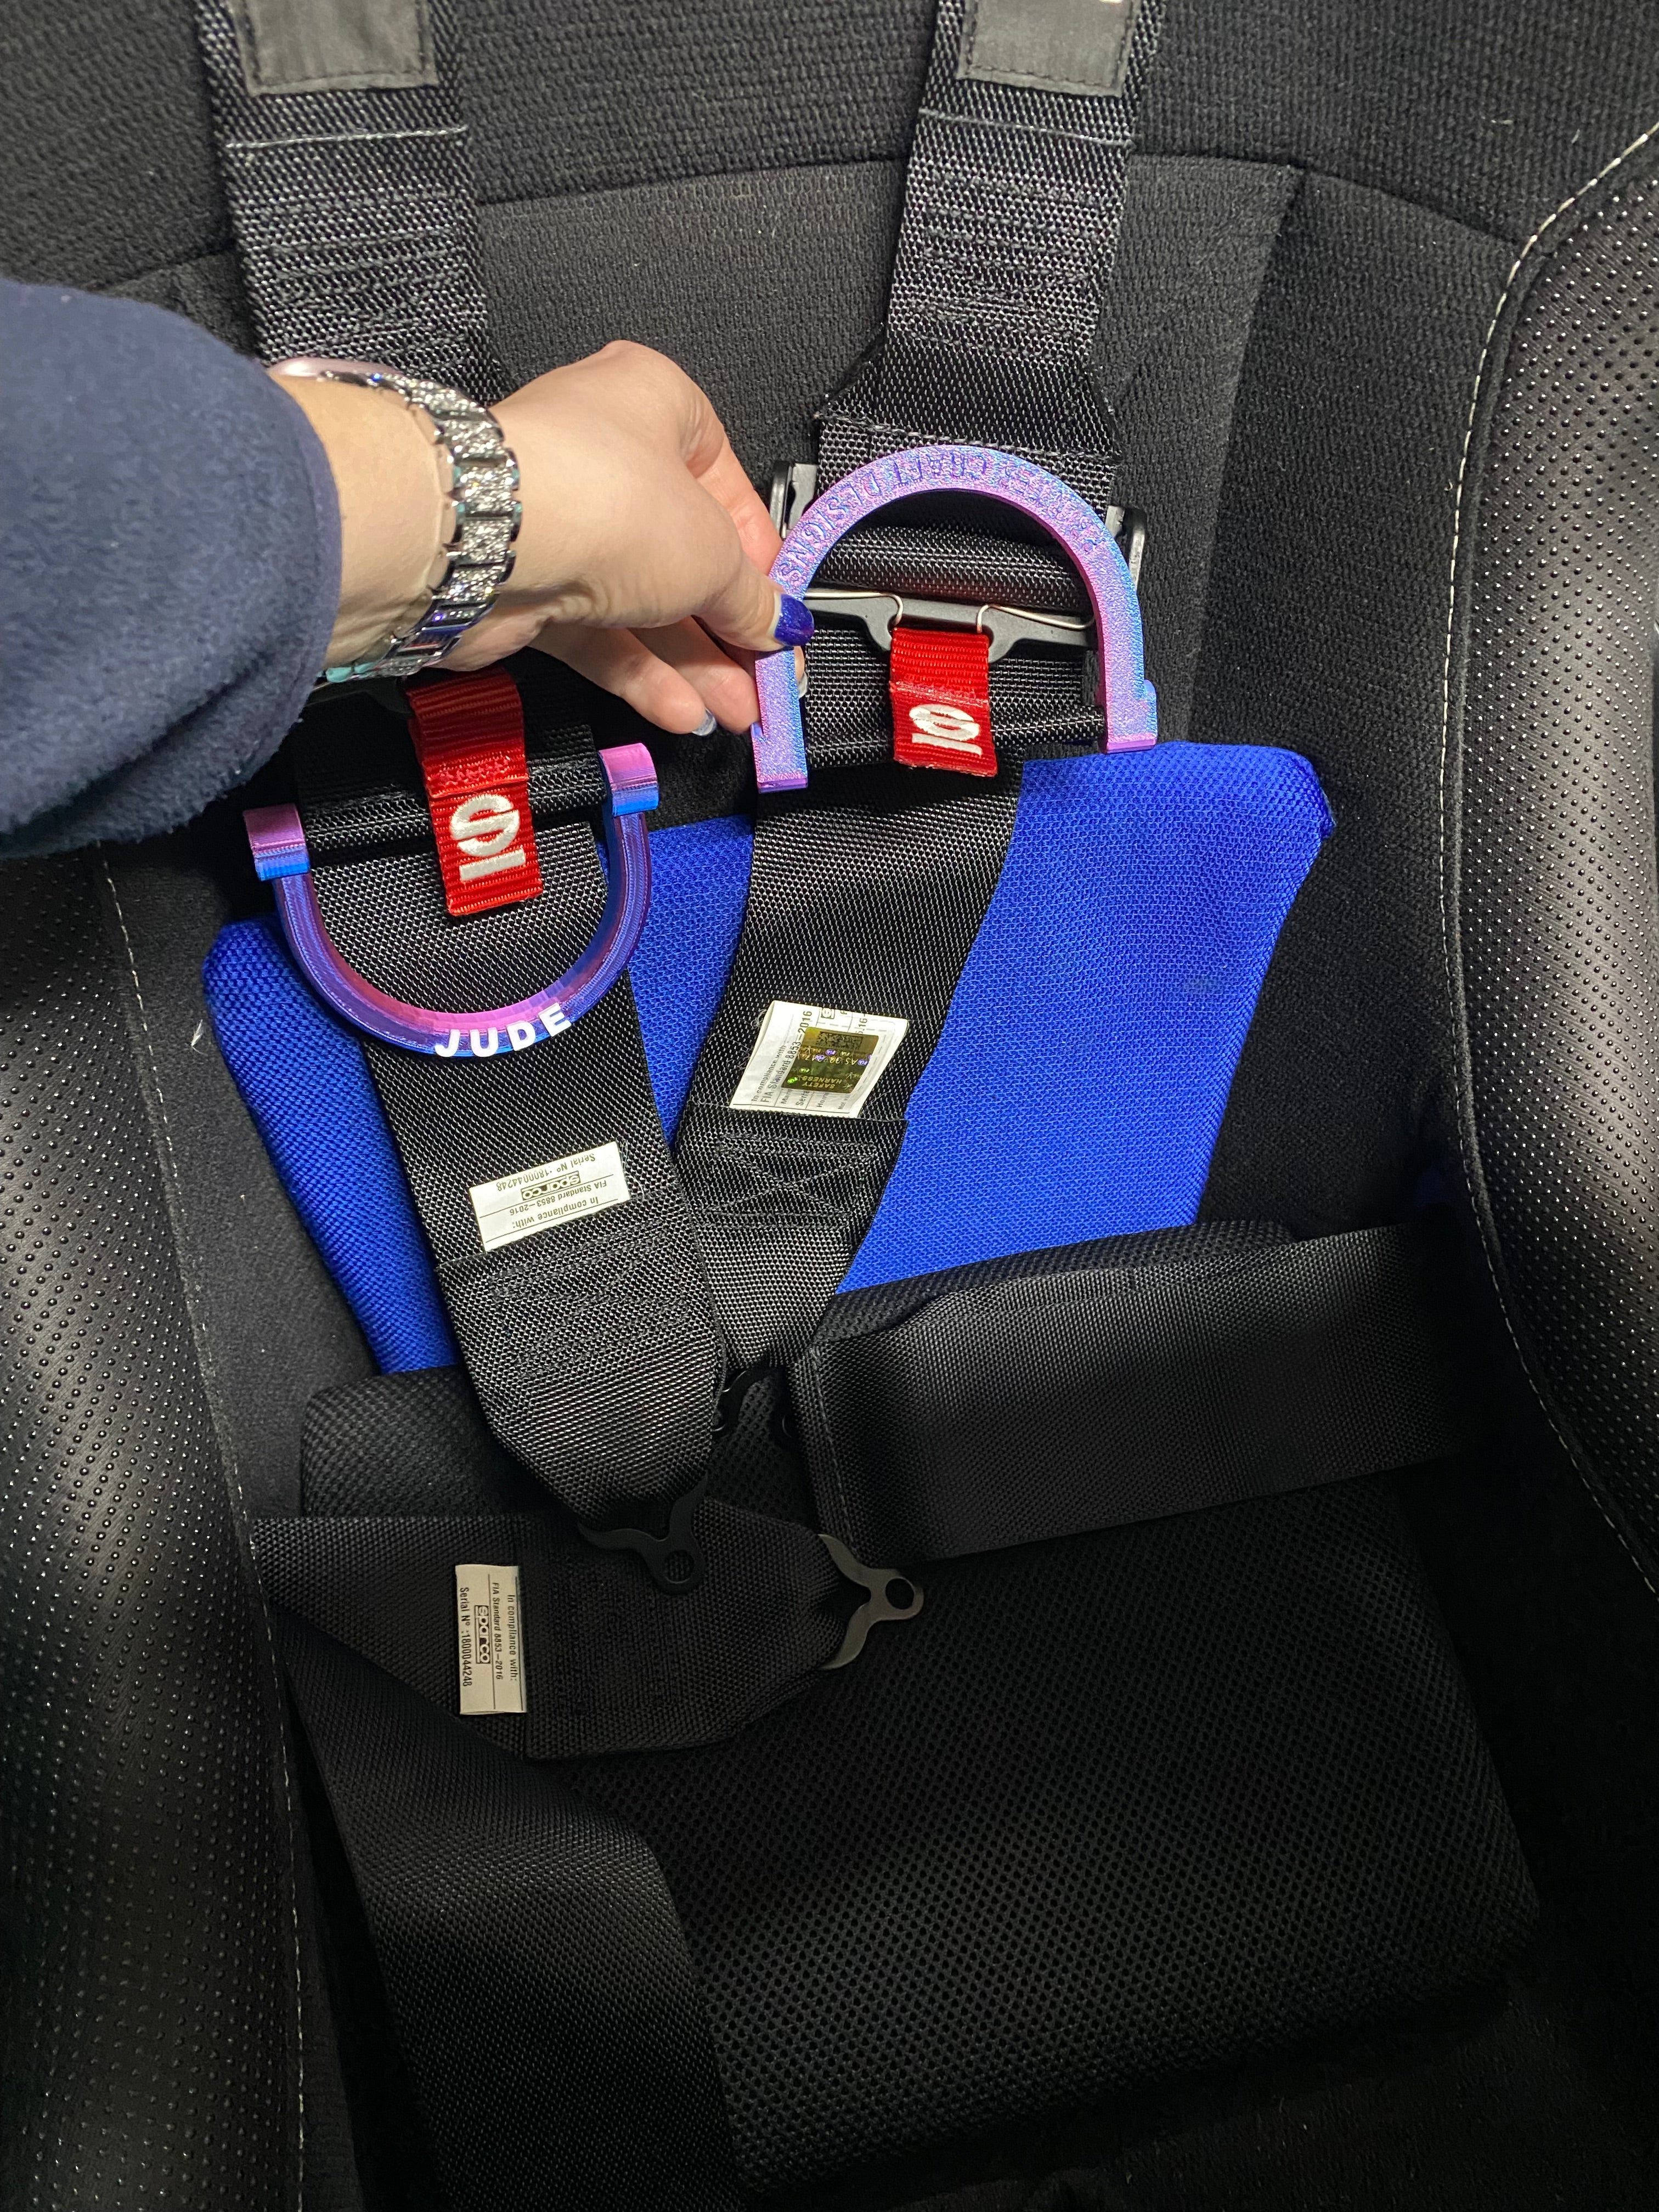 Racecar seatbelt/harness handle